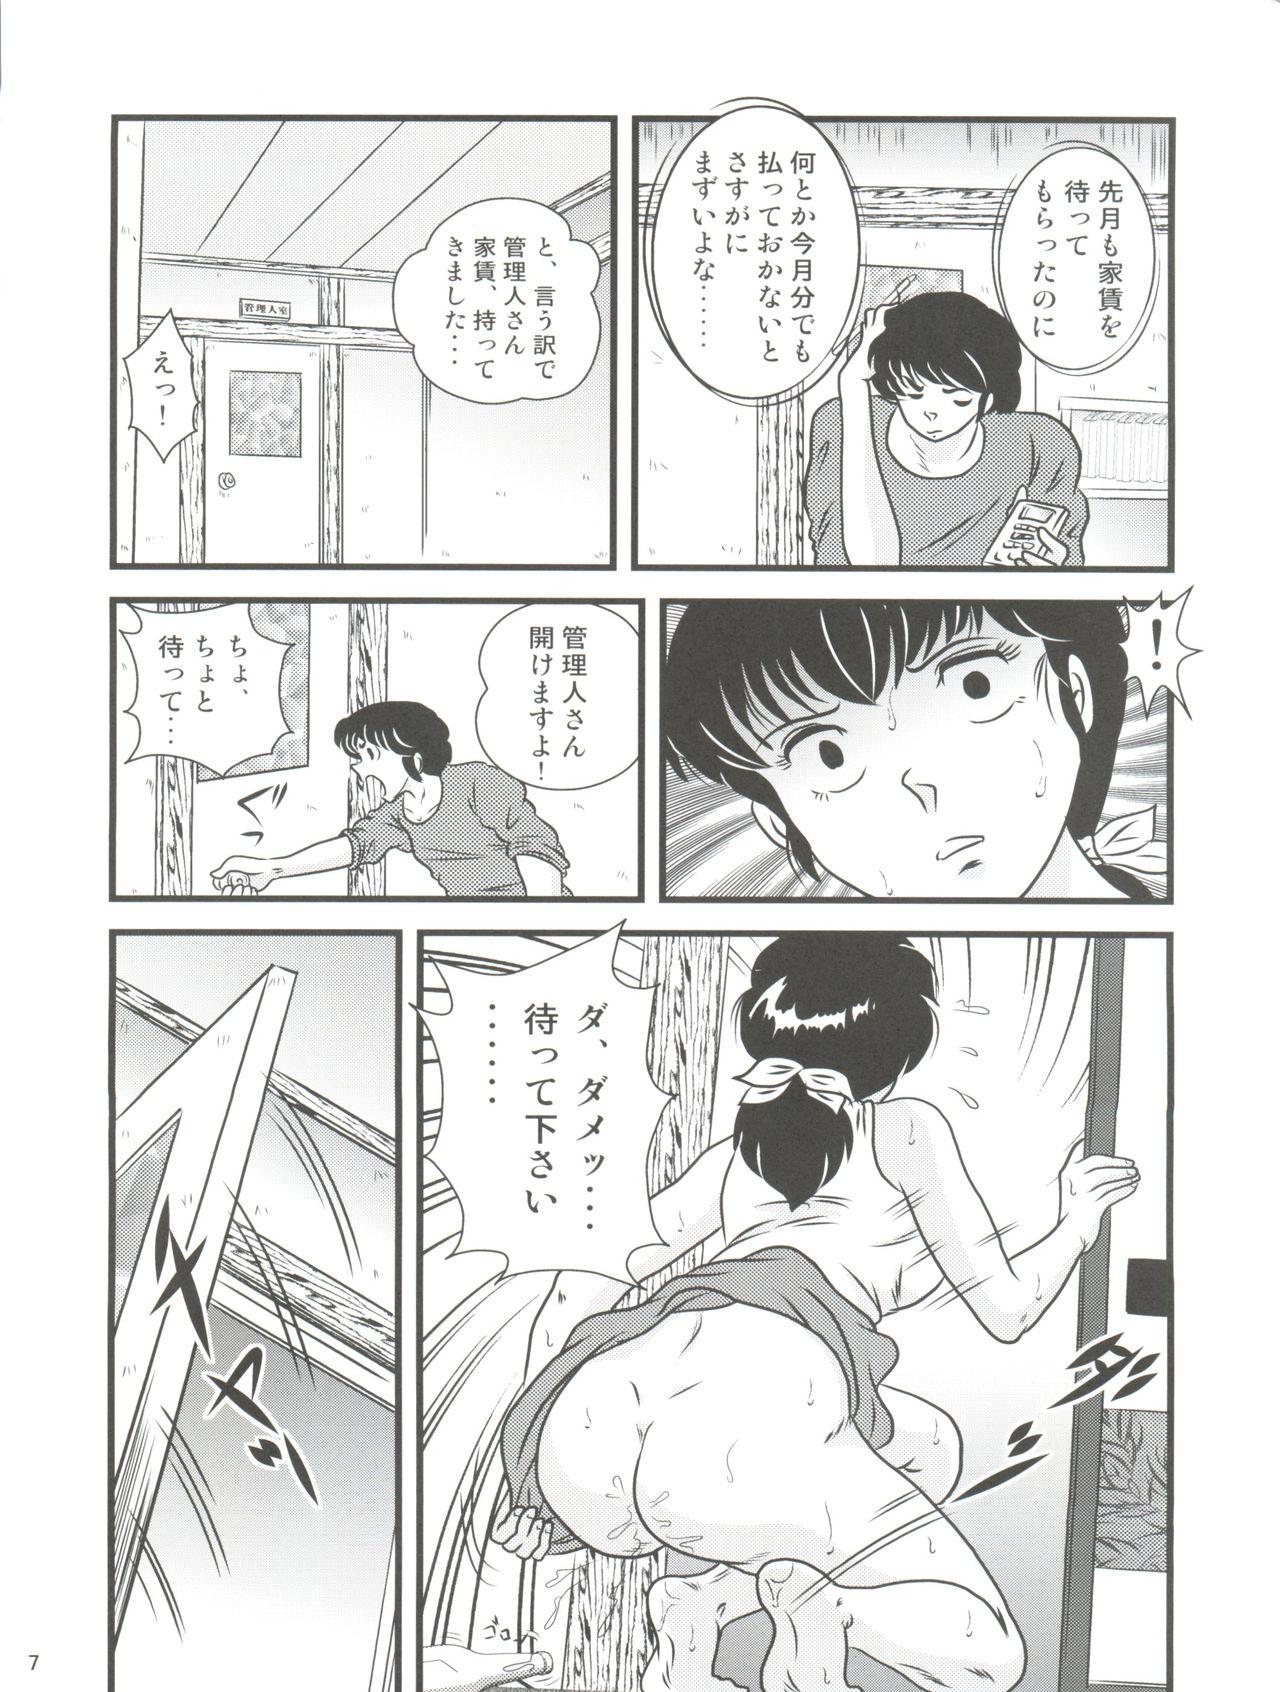 Girlfriends Fairy 17 - Maison ikkoku Hood - Page 7